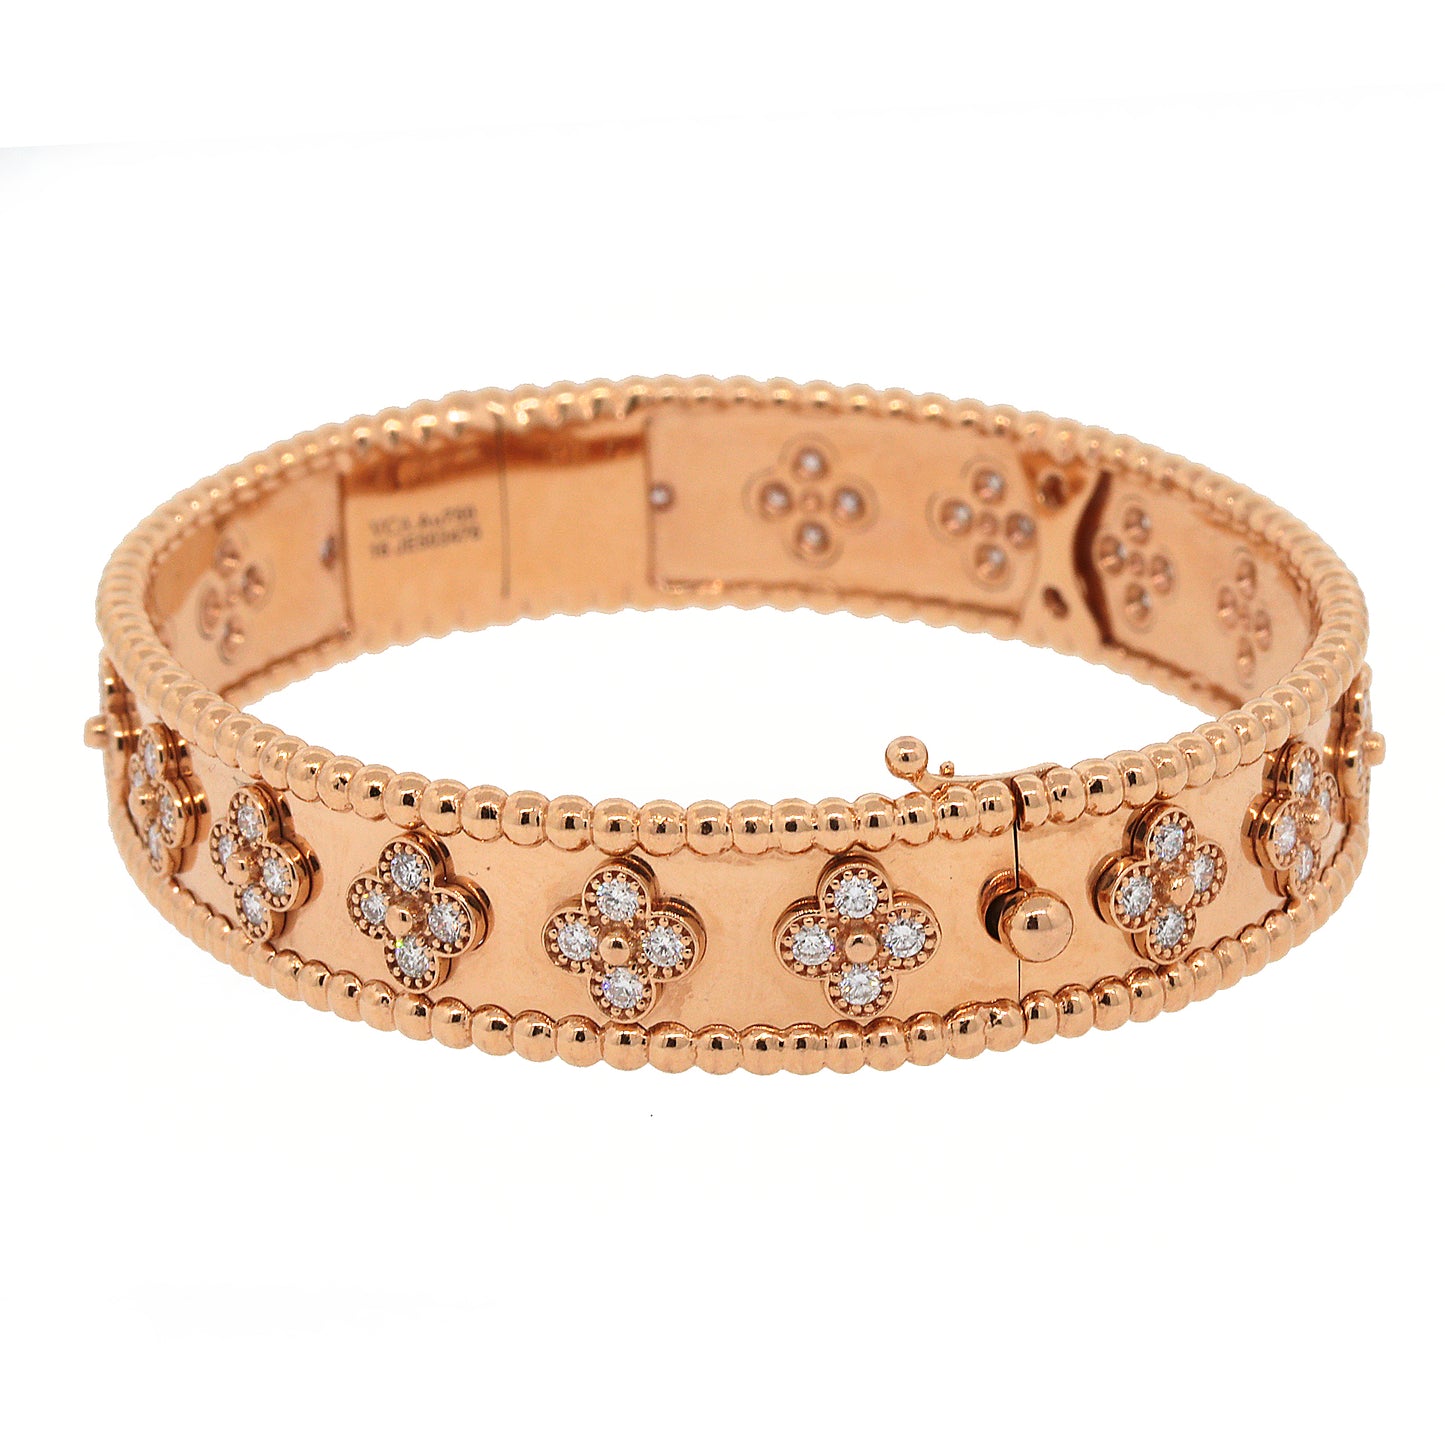 Van Cleef & Arpels Perlée Collection Diamond Bracelet in 18k Gold